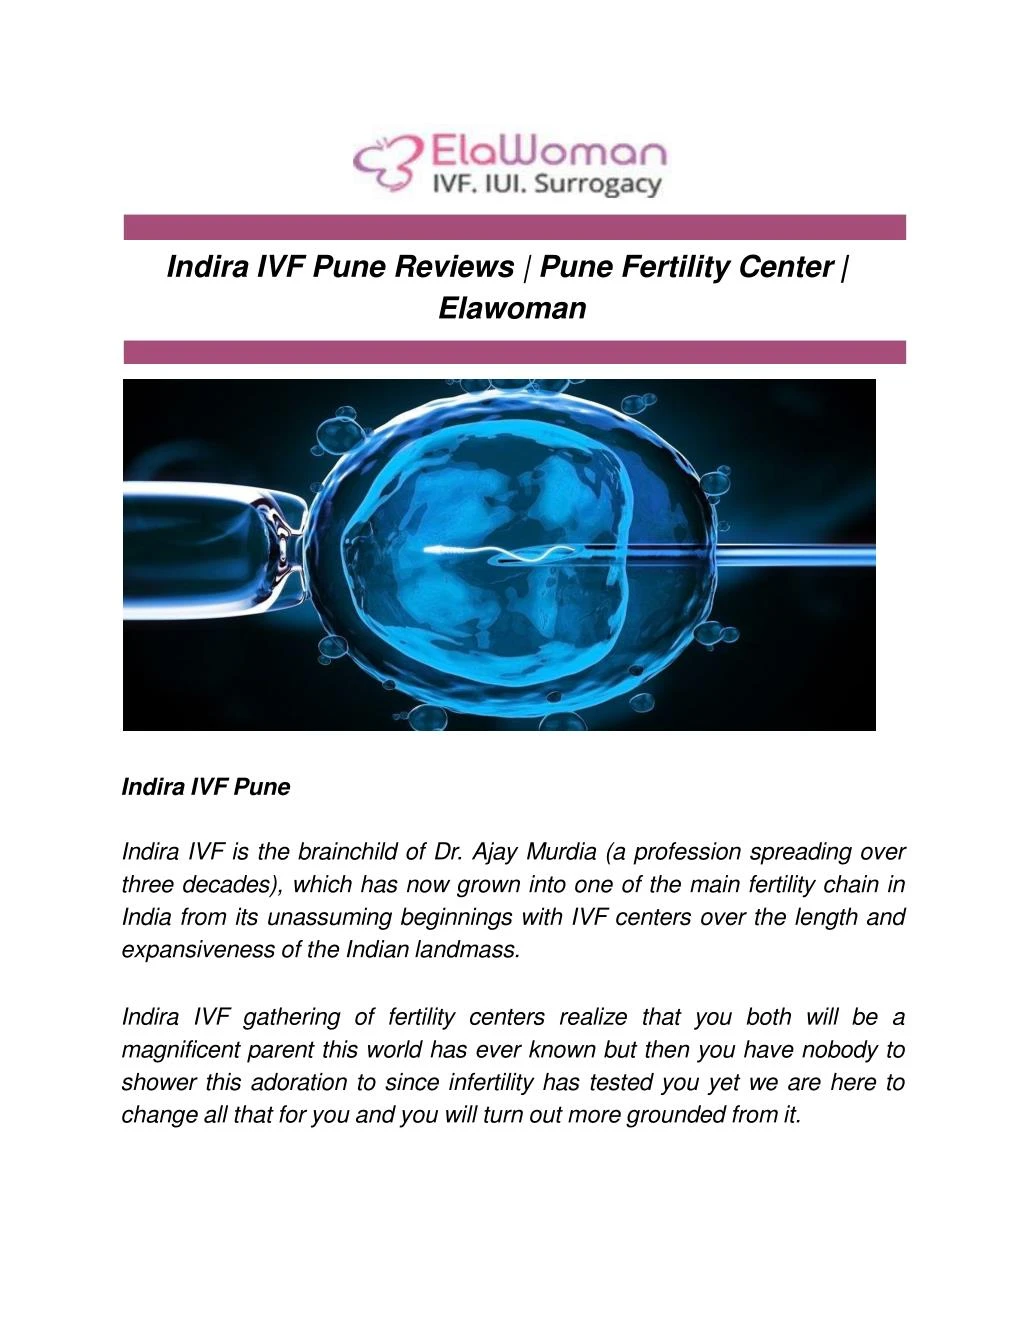 indira ivf pune reviews pune fertility center